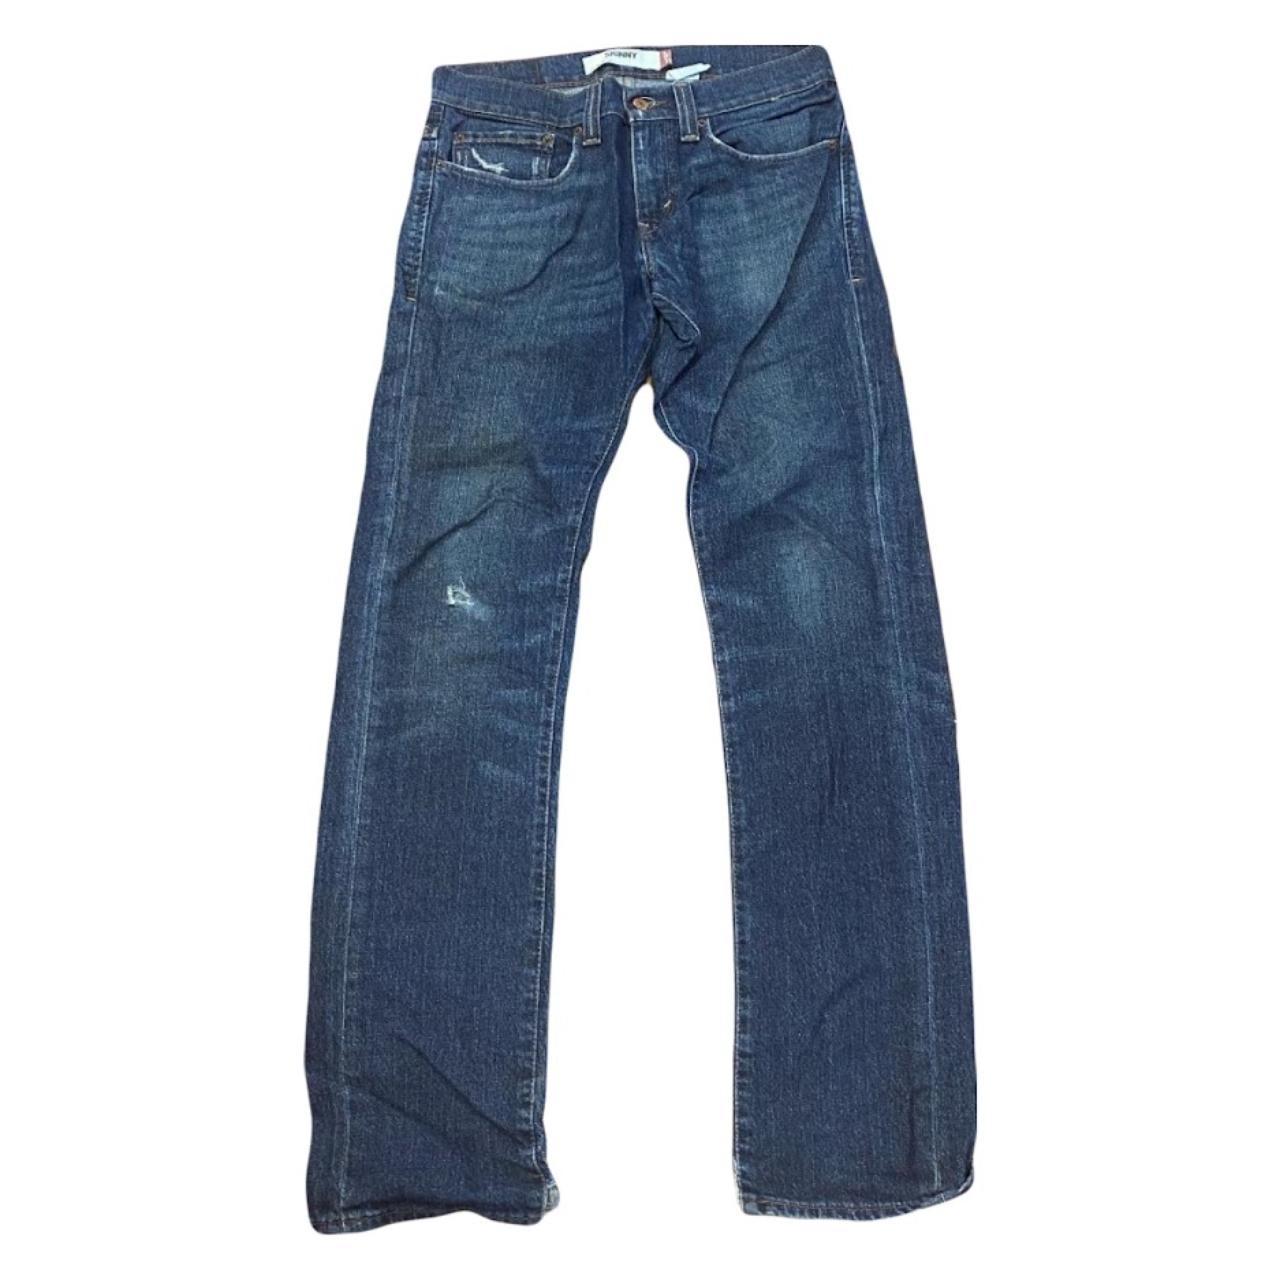 LEVIS Jeans Size W31 L-32 Price £40, Depop